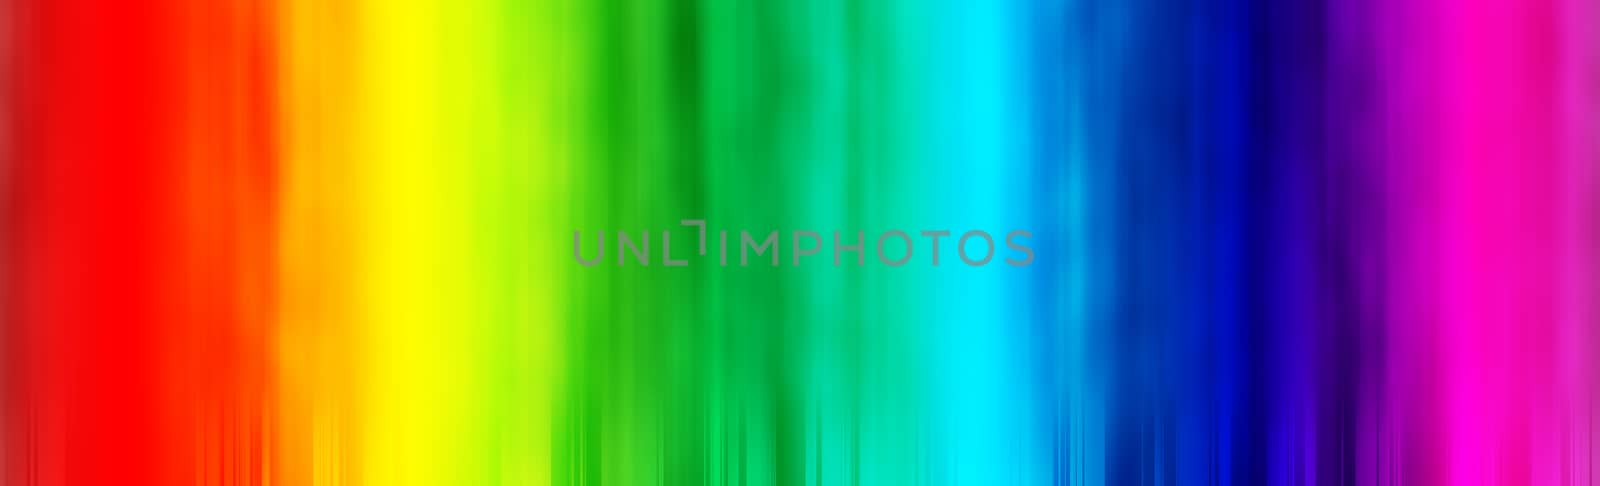 Rainbow colors abstract background. by Eugene_Yemelyanov